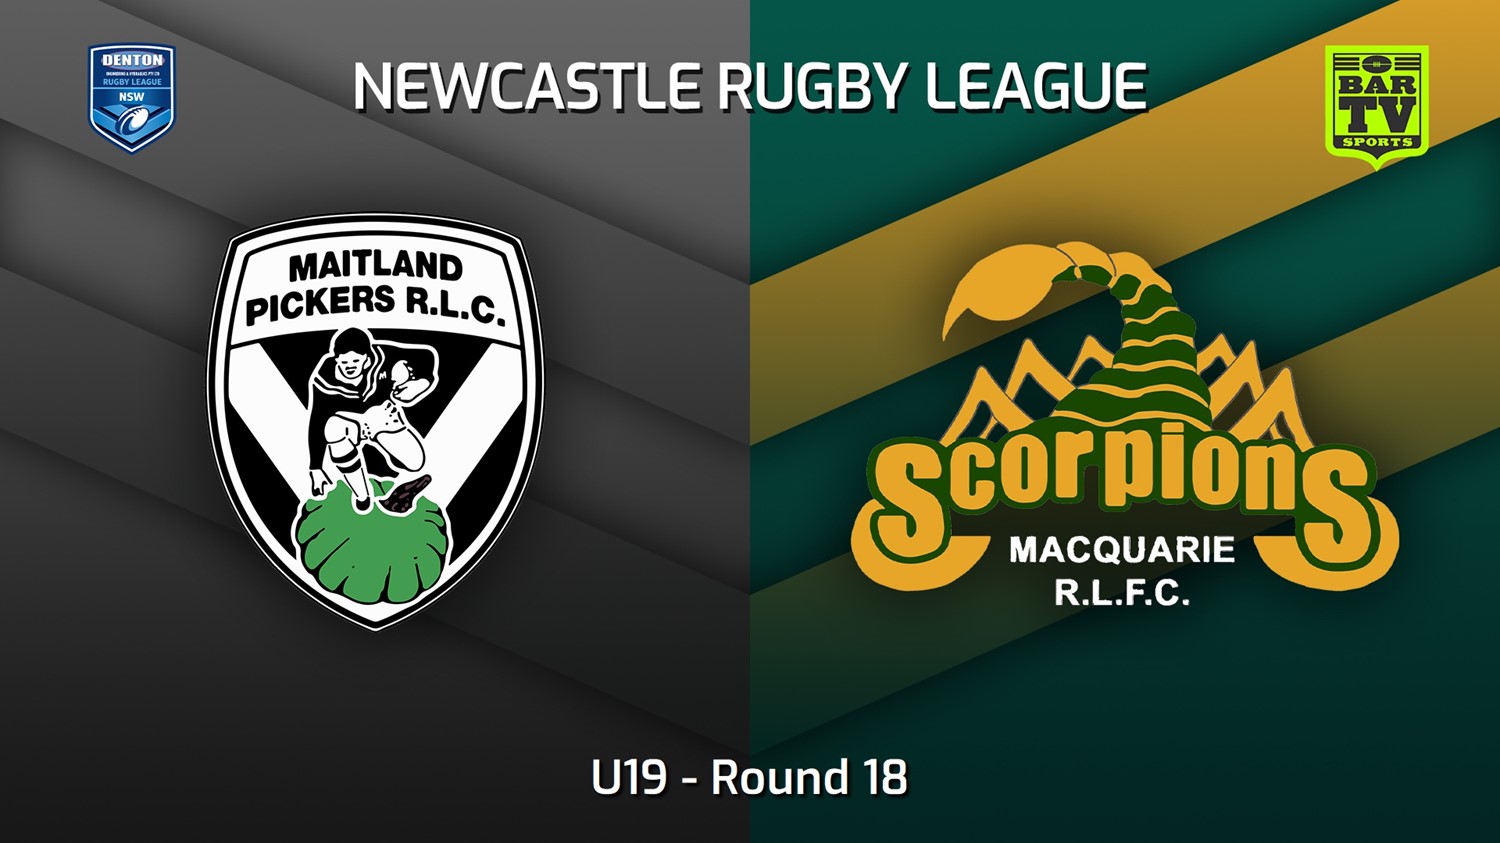 220807-Newcastle Round 18 - U19 - Maitland Pickers v Macquarie Scorpions Slate Image